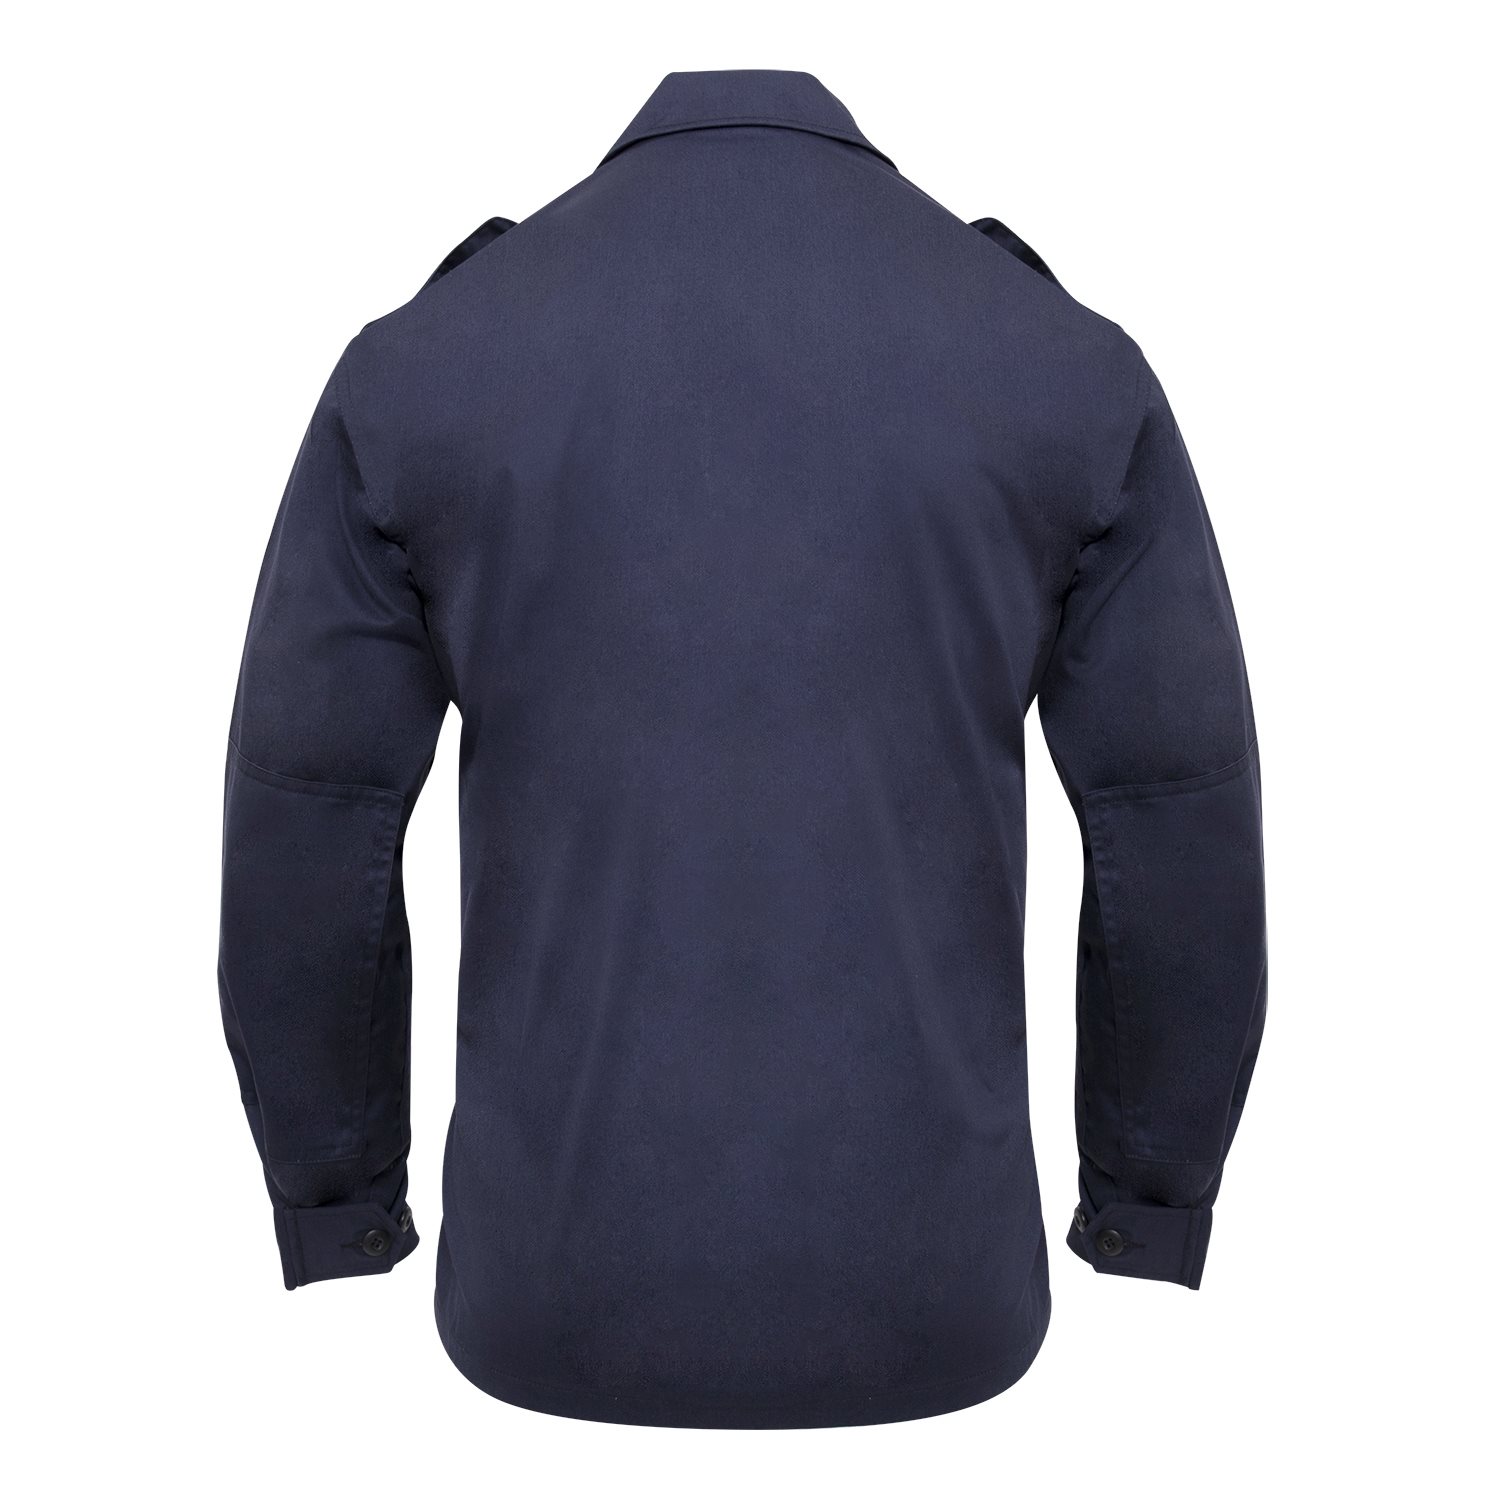 Tactical BDU shirt long sleeve BLUE ROTHCO 6110 L-11